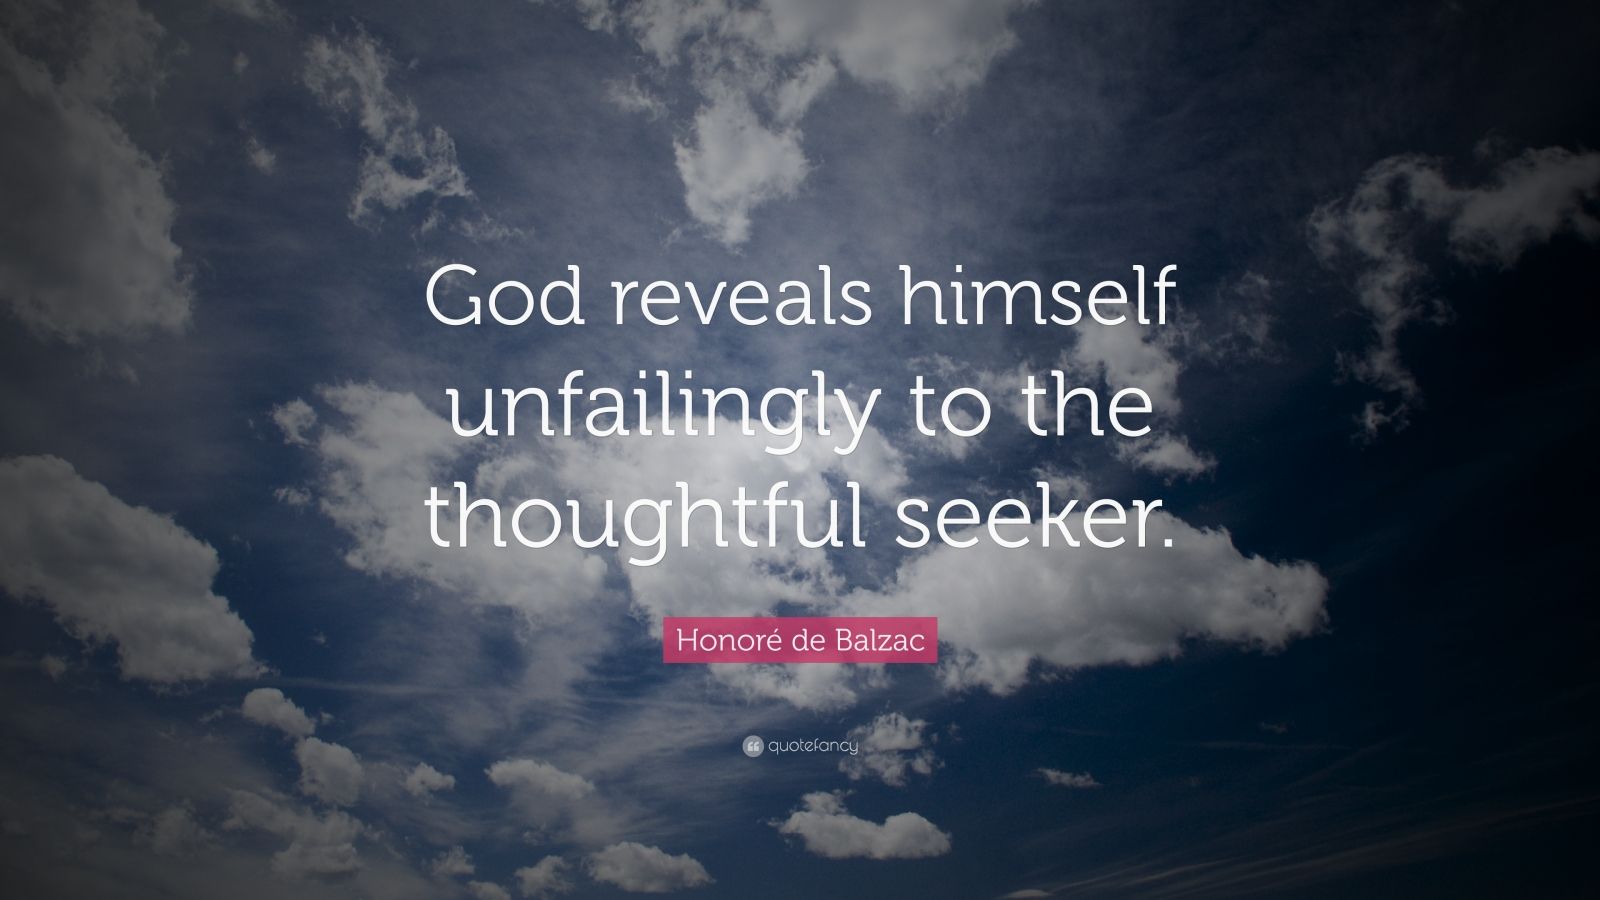 Honoré de Balzac Quote: “God reveals himself unfailingly to the thoughtful seeker ...